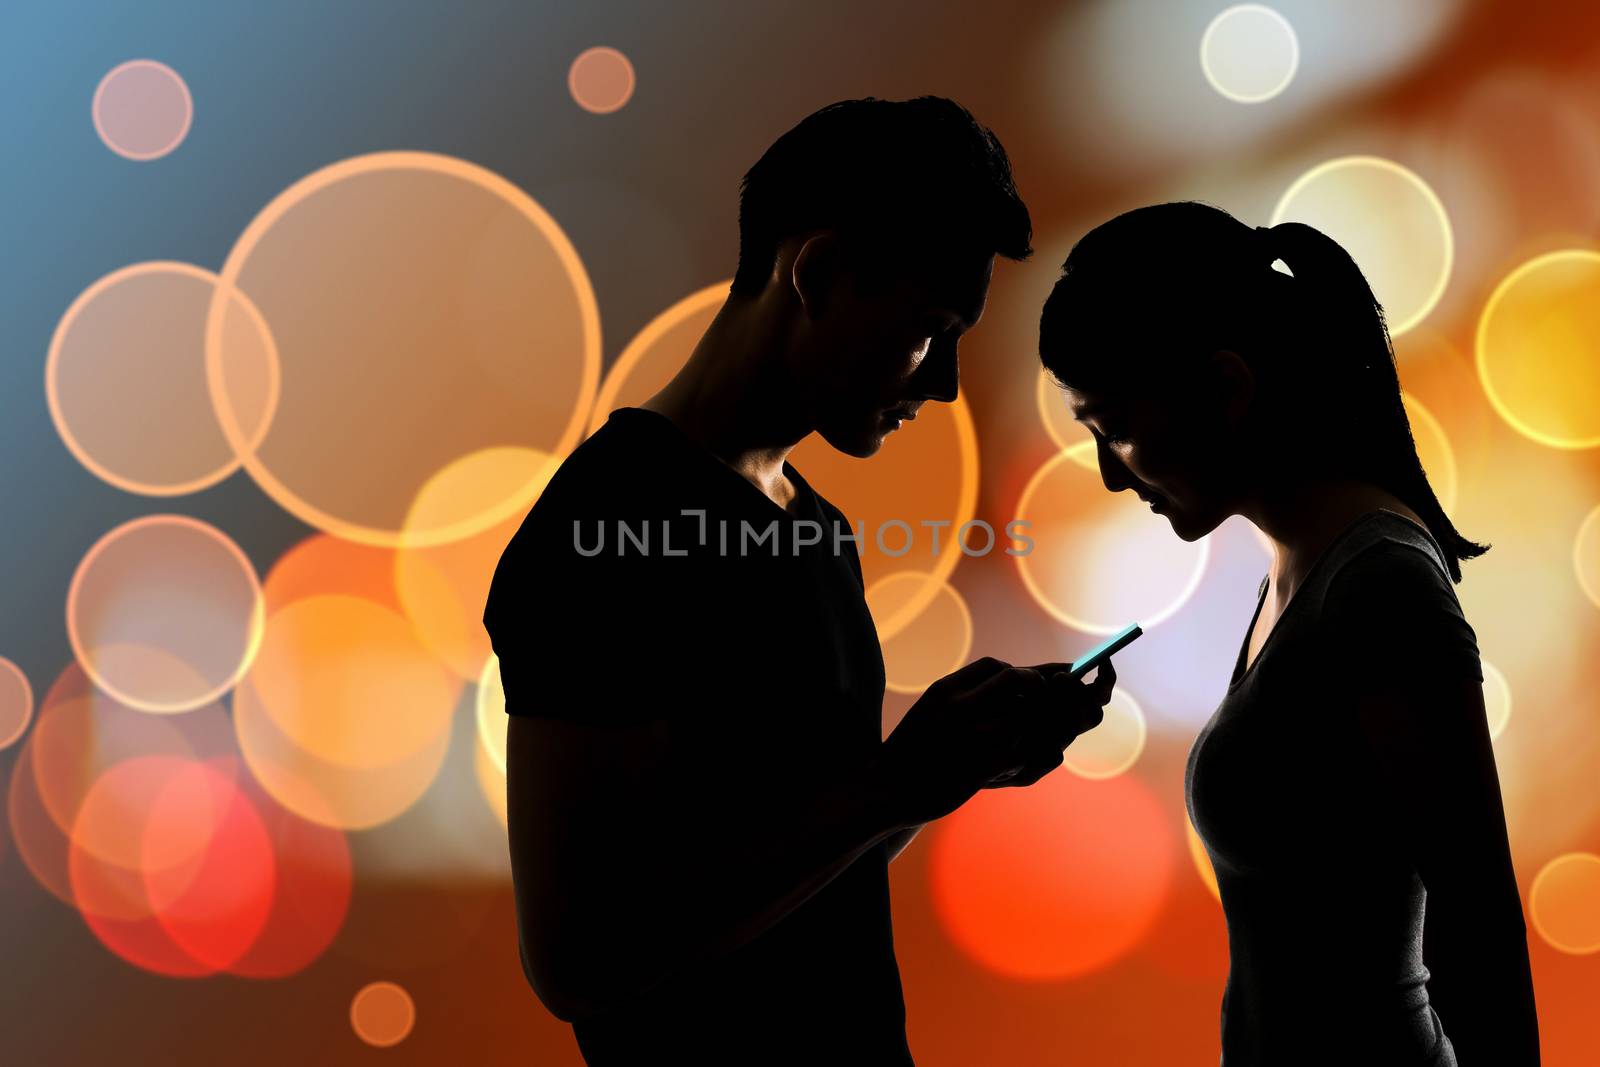 Couple using cellphone, silhouette portrait.